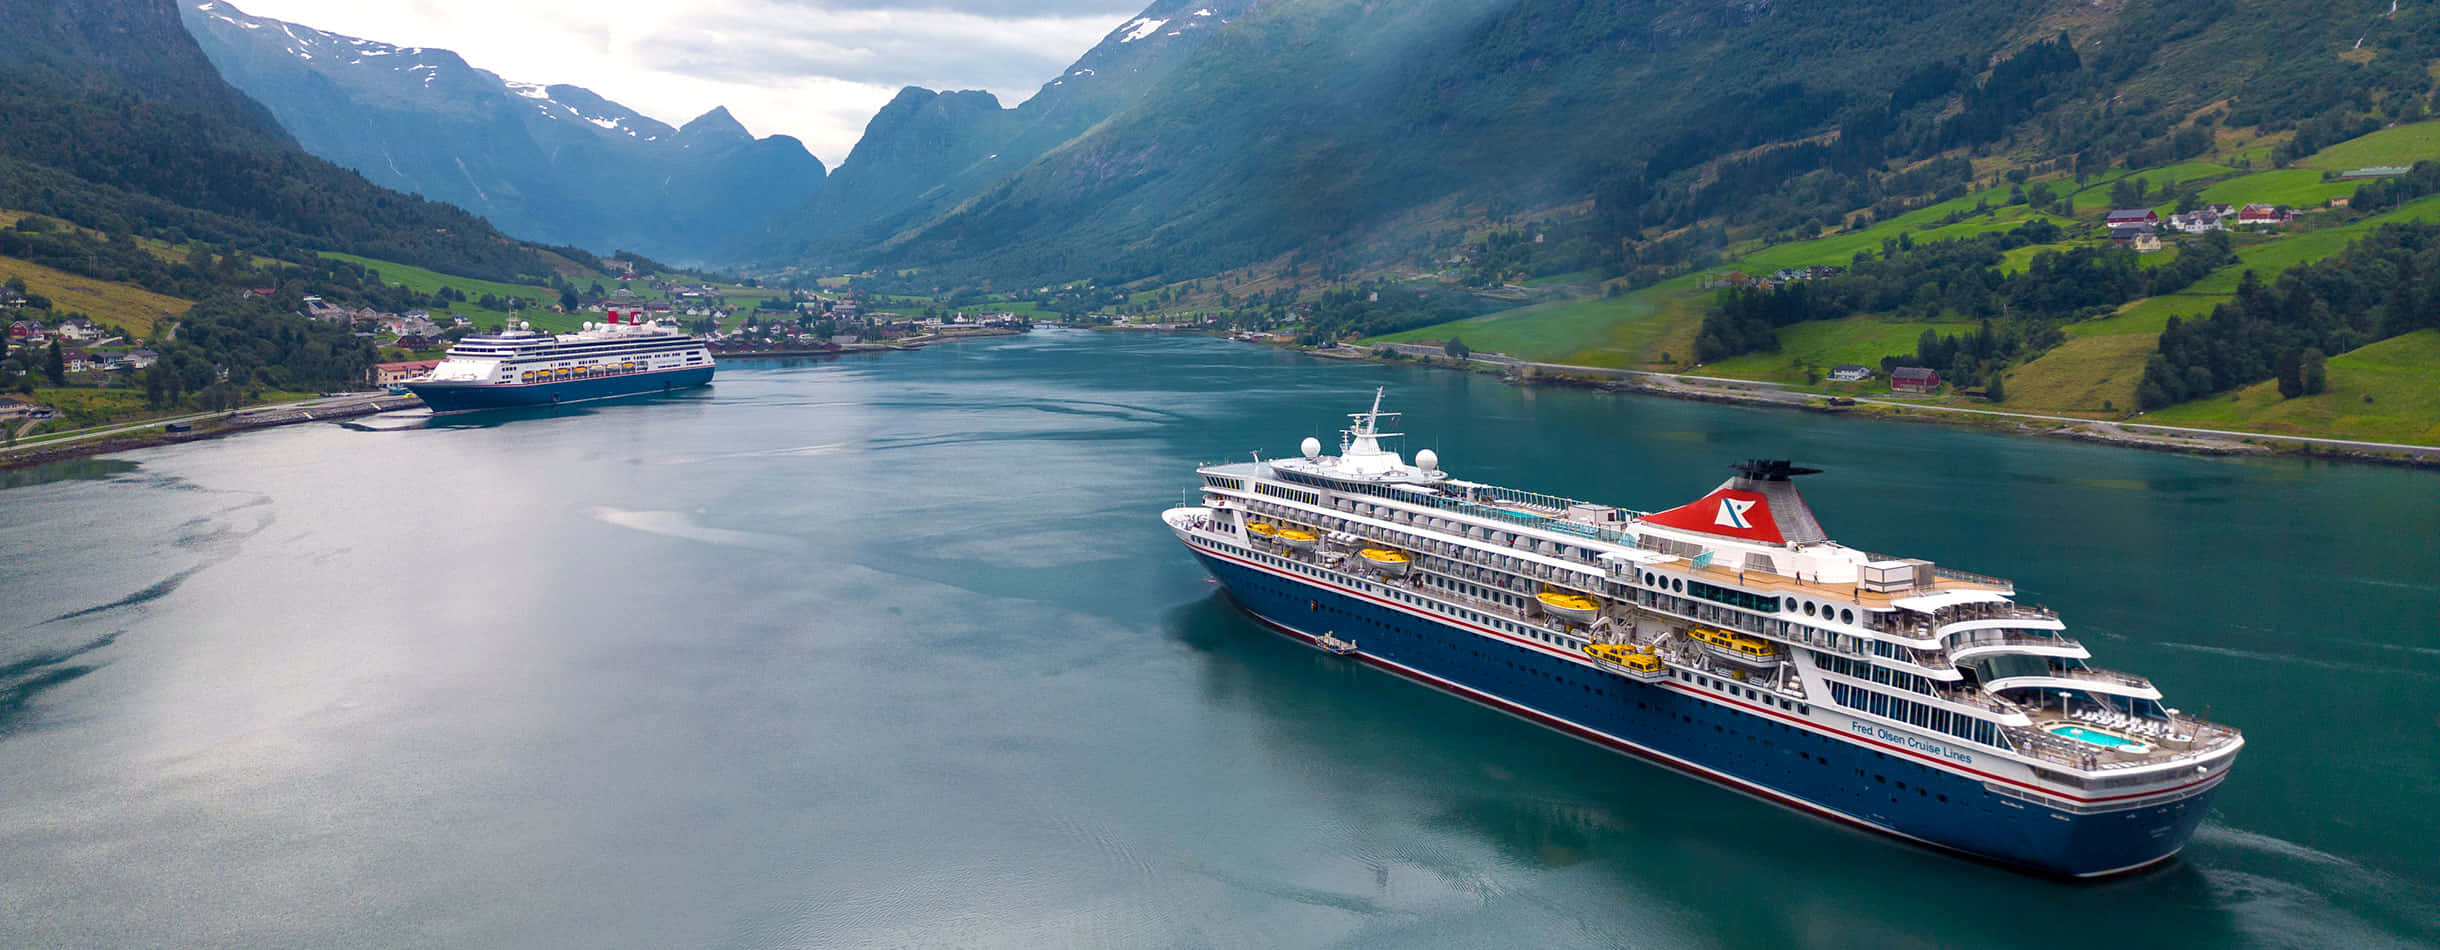 Enjoy life aboard a beautiful and luxurious cruise ship